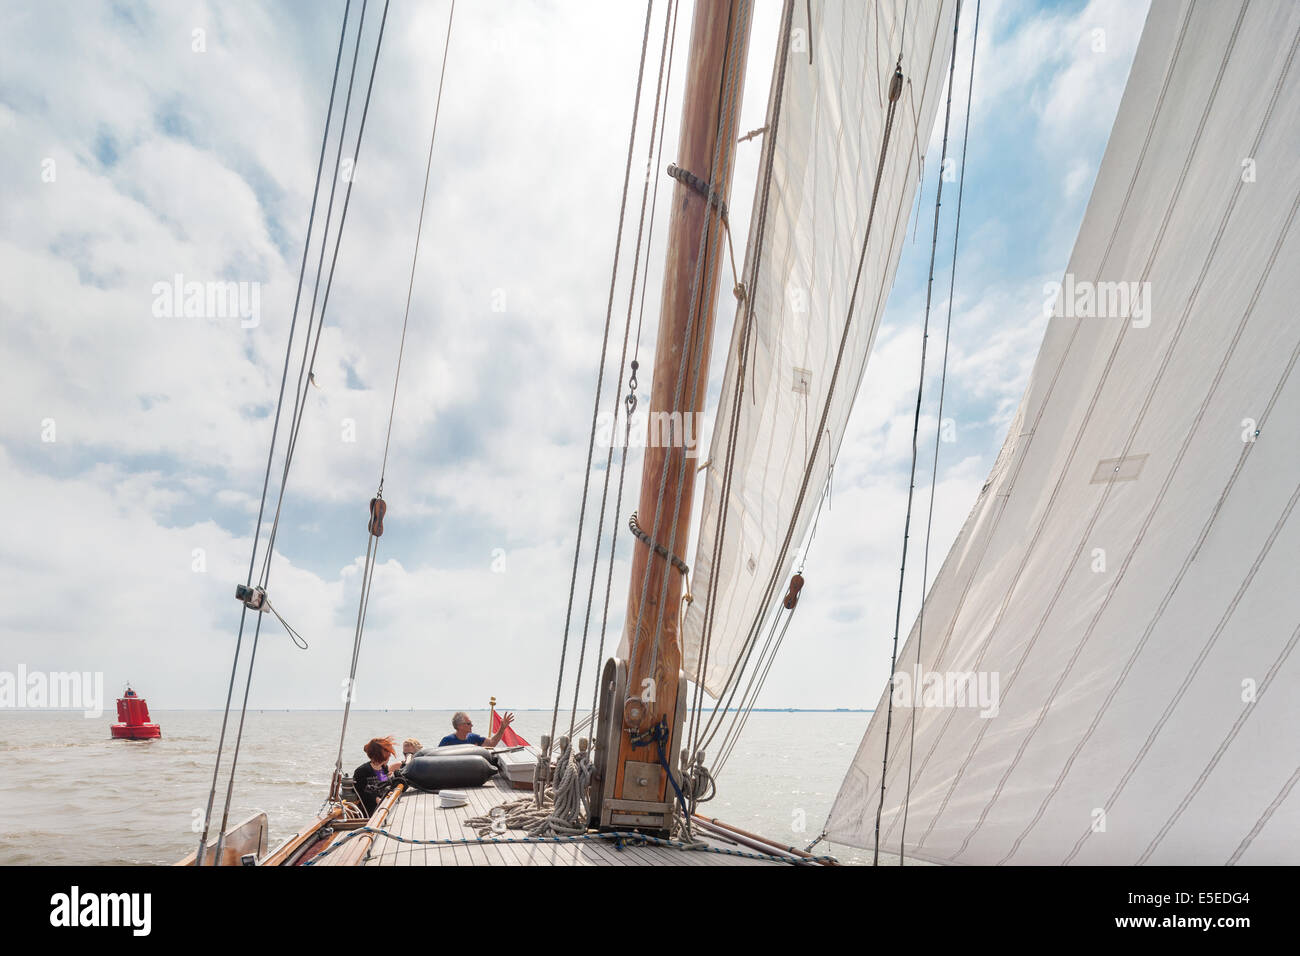 Segeln auf dem Wattenmeer Wattenmeer auf einem traditionellen Lemsteraak Schiff Segelboot segeln. Niederlande-Unesco Weltkulturerbe Stockfoto